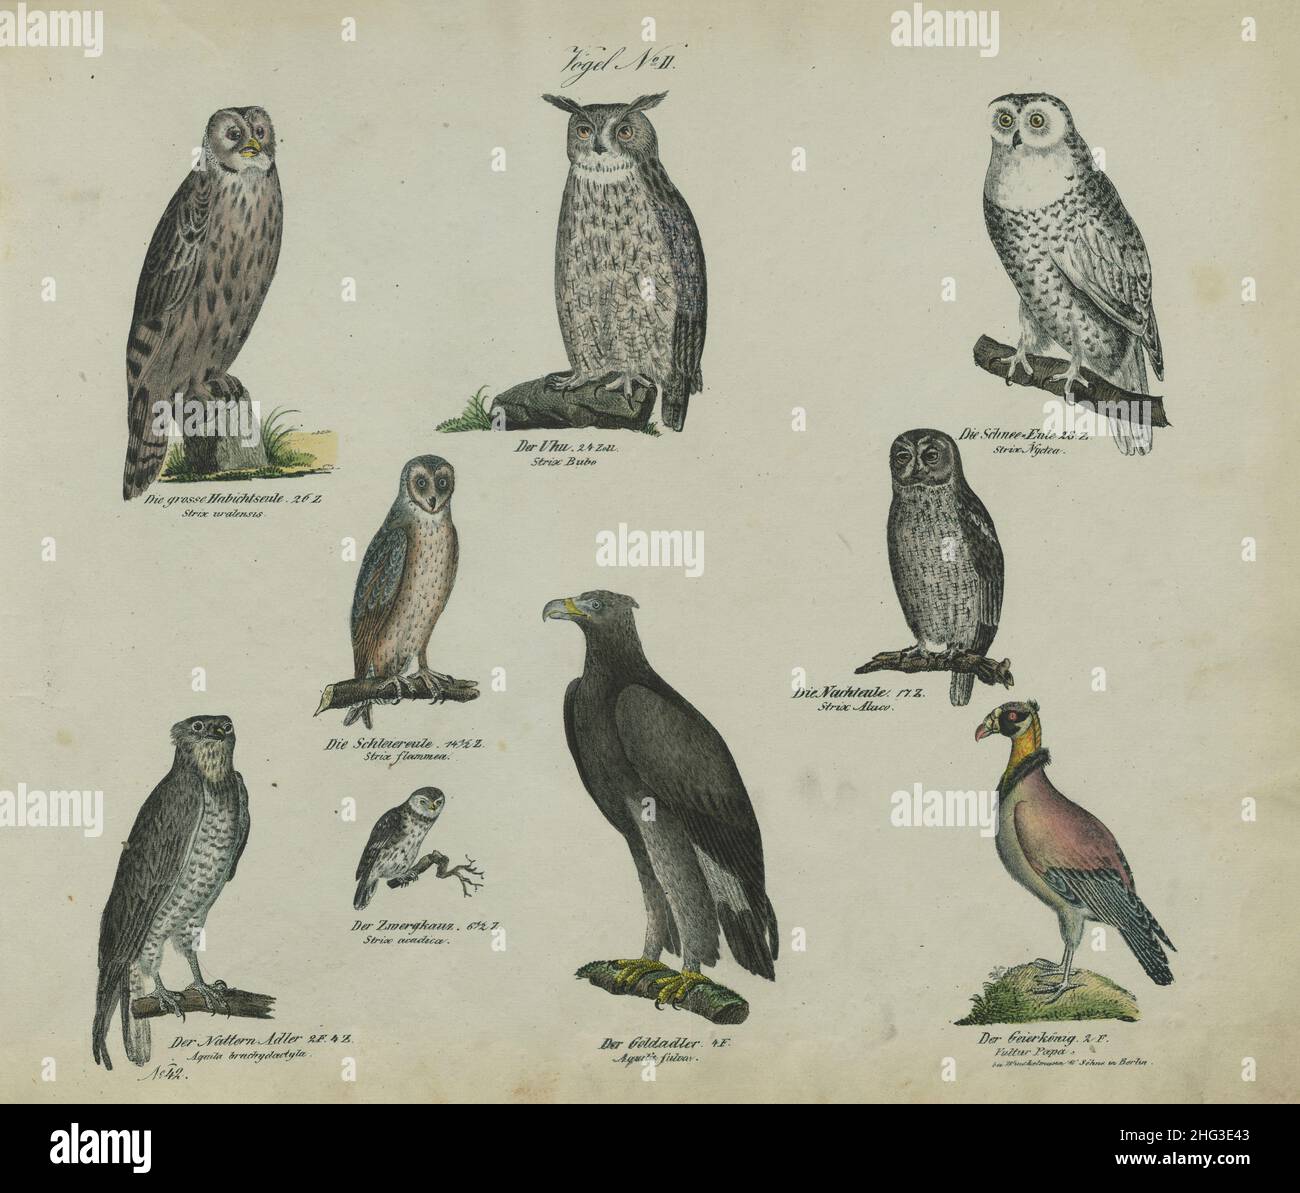 Disegni vintage di uccelli. N. II. Germania, 1836 (by Linnaeus classification, 1758) prima fila da sinistra a destra: Gran falco gufo, aquila gufo, neve gufo mi Foto Stock